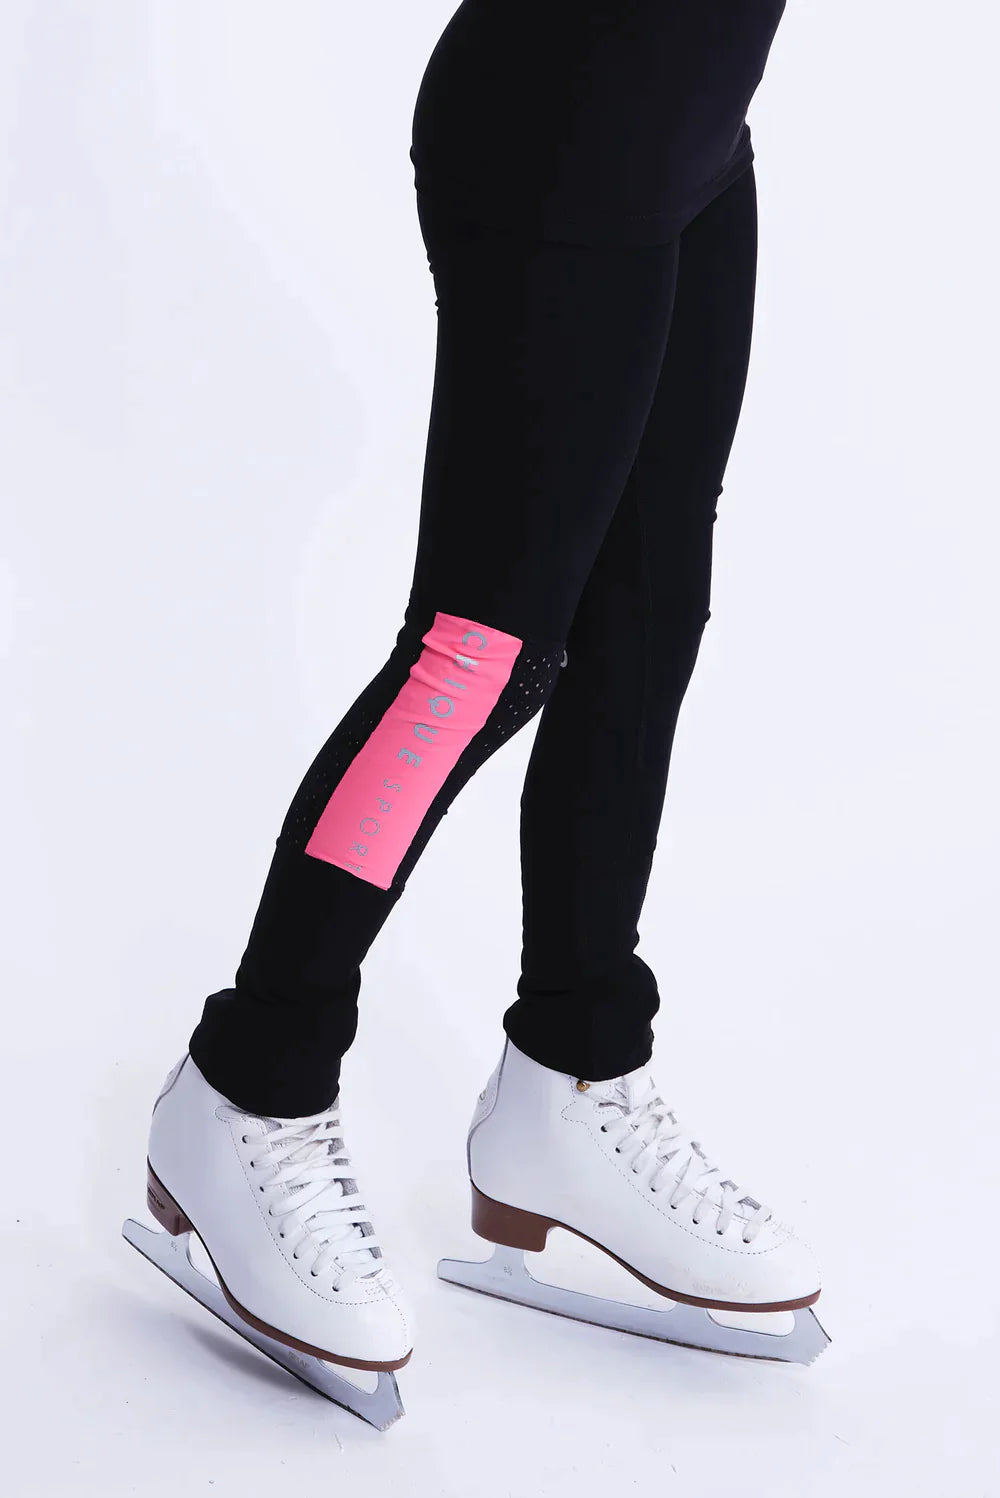 Inspire Non-Slip Leggings in Pink